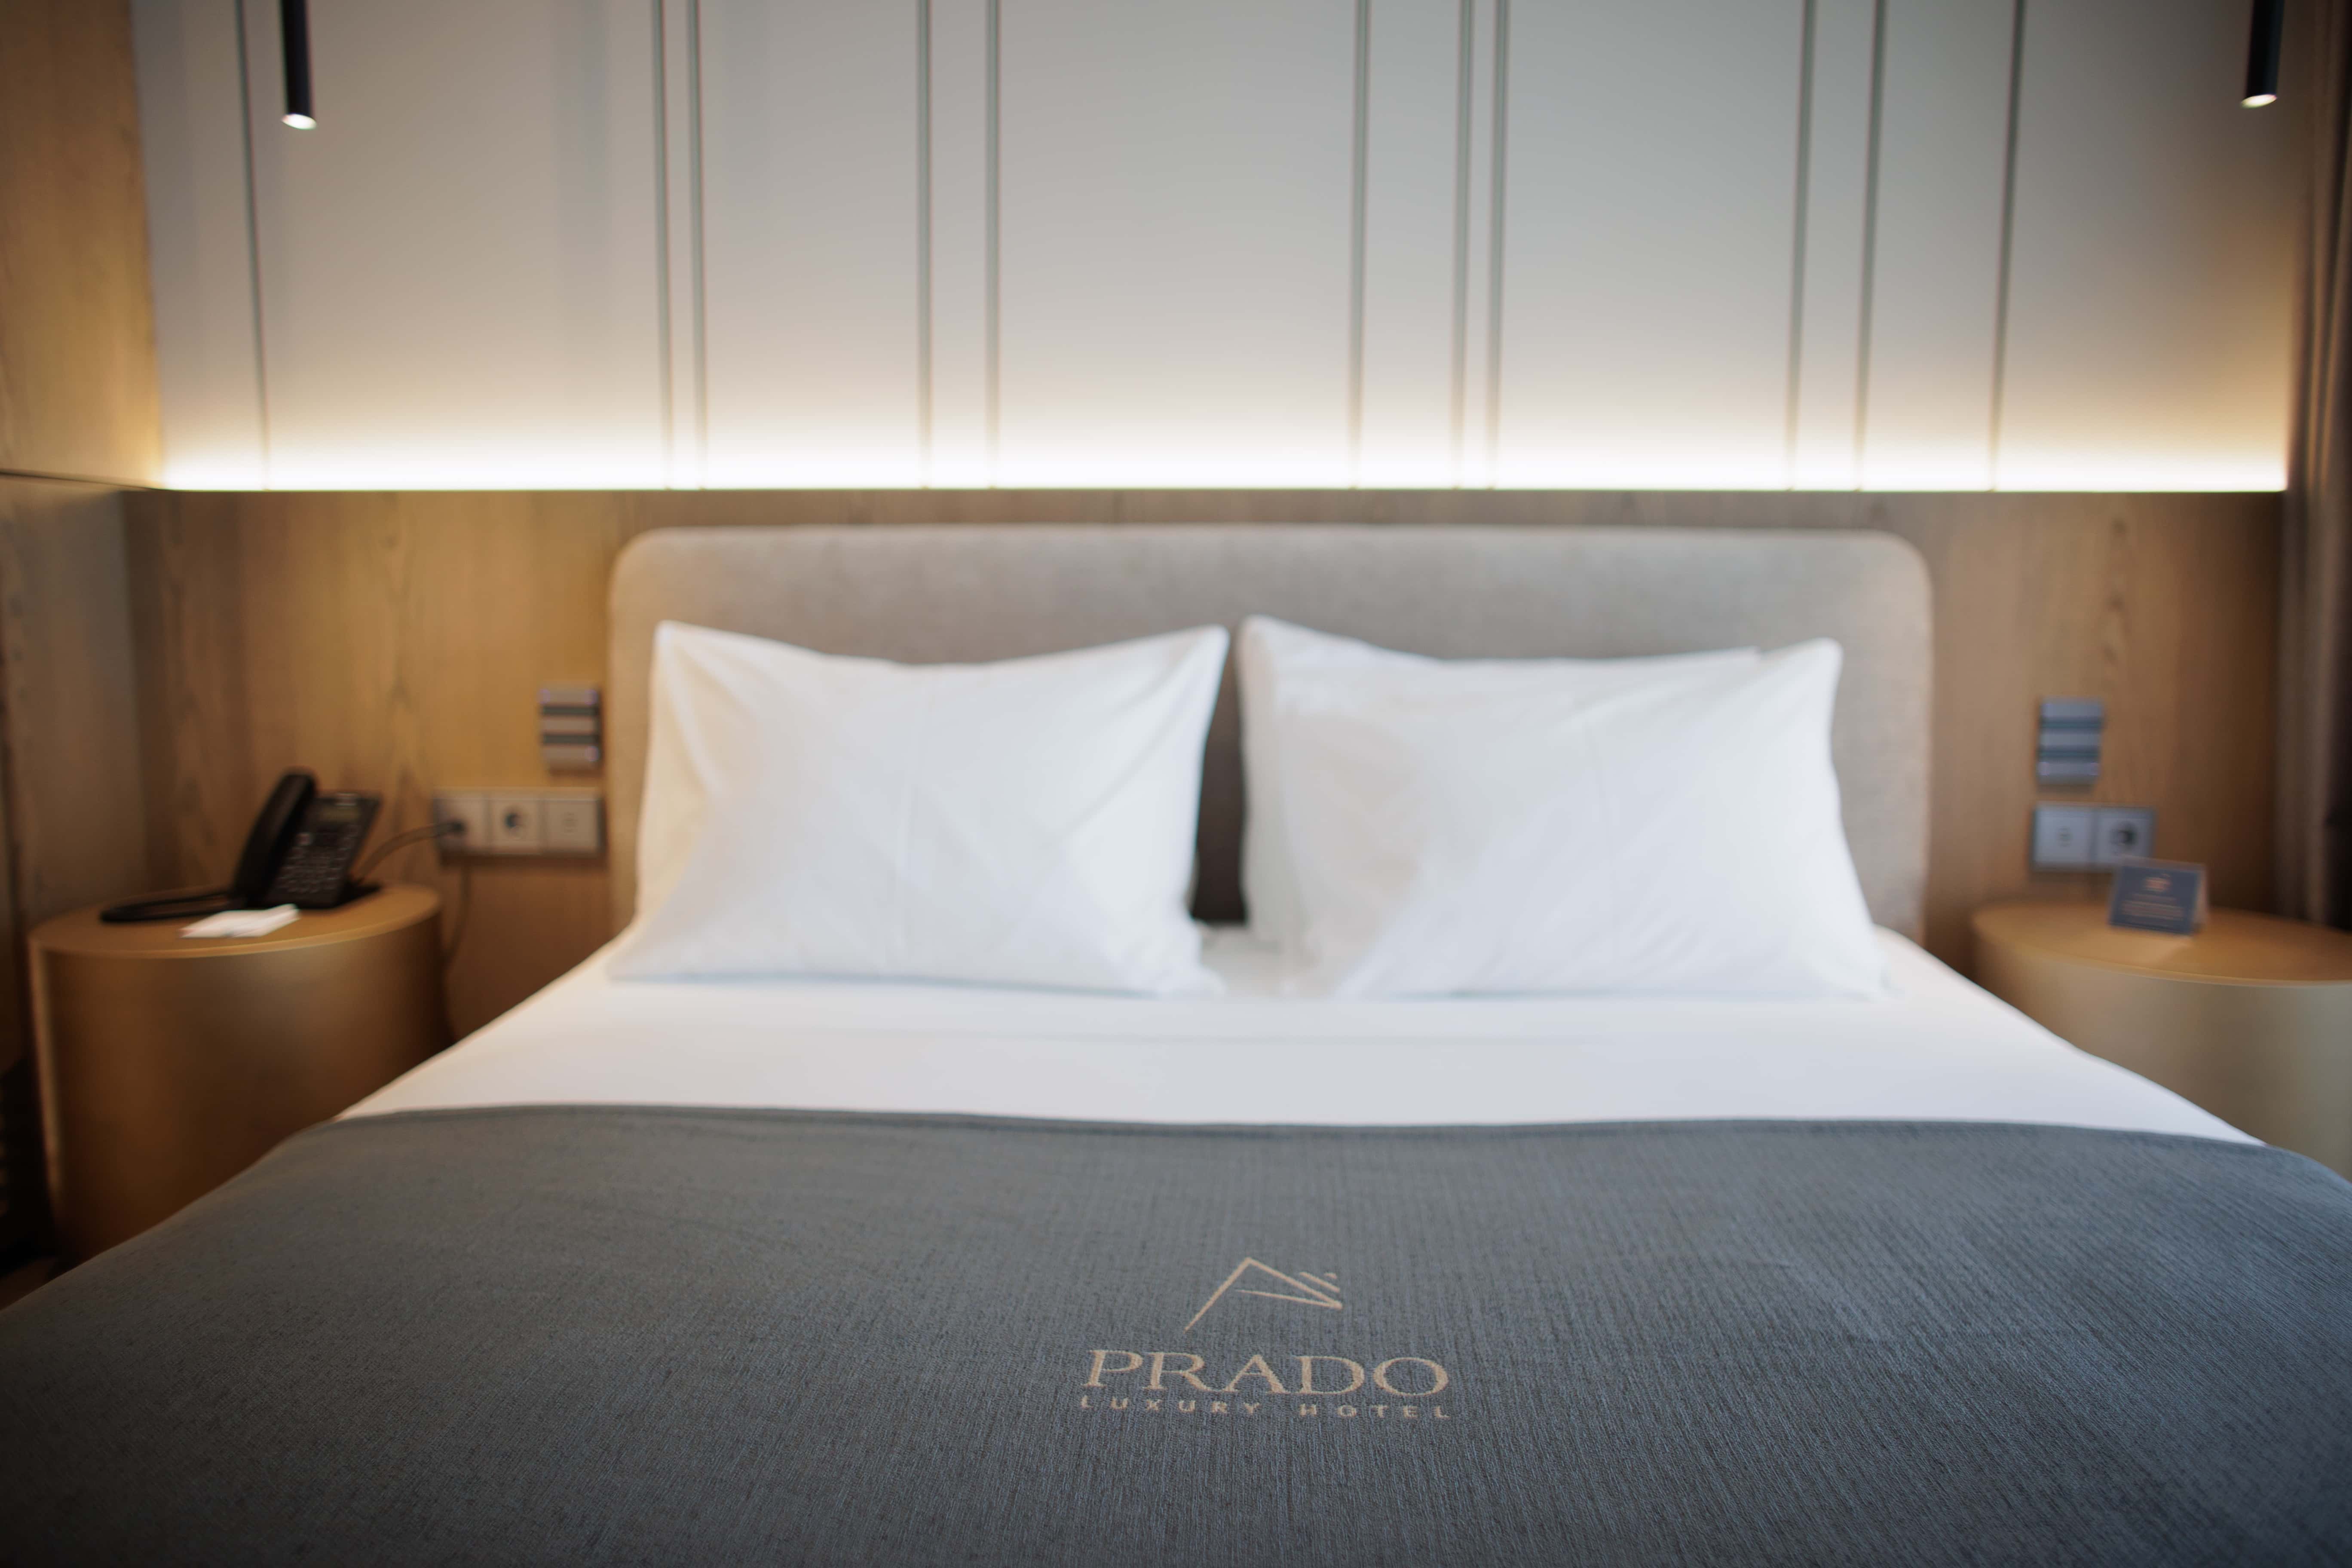 prado_luxury_hotel_room_standard_jacuzzi_bed